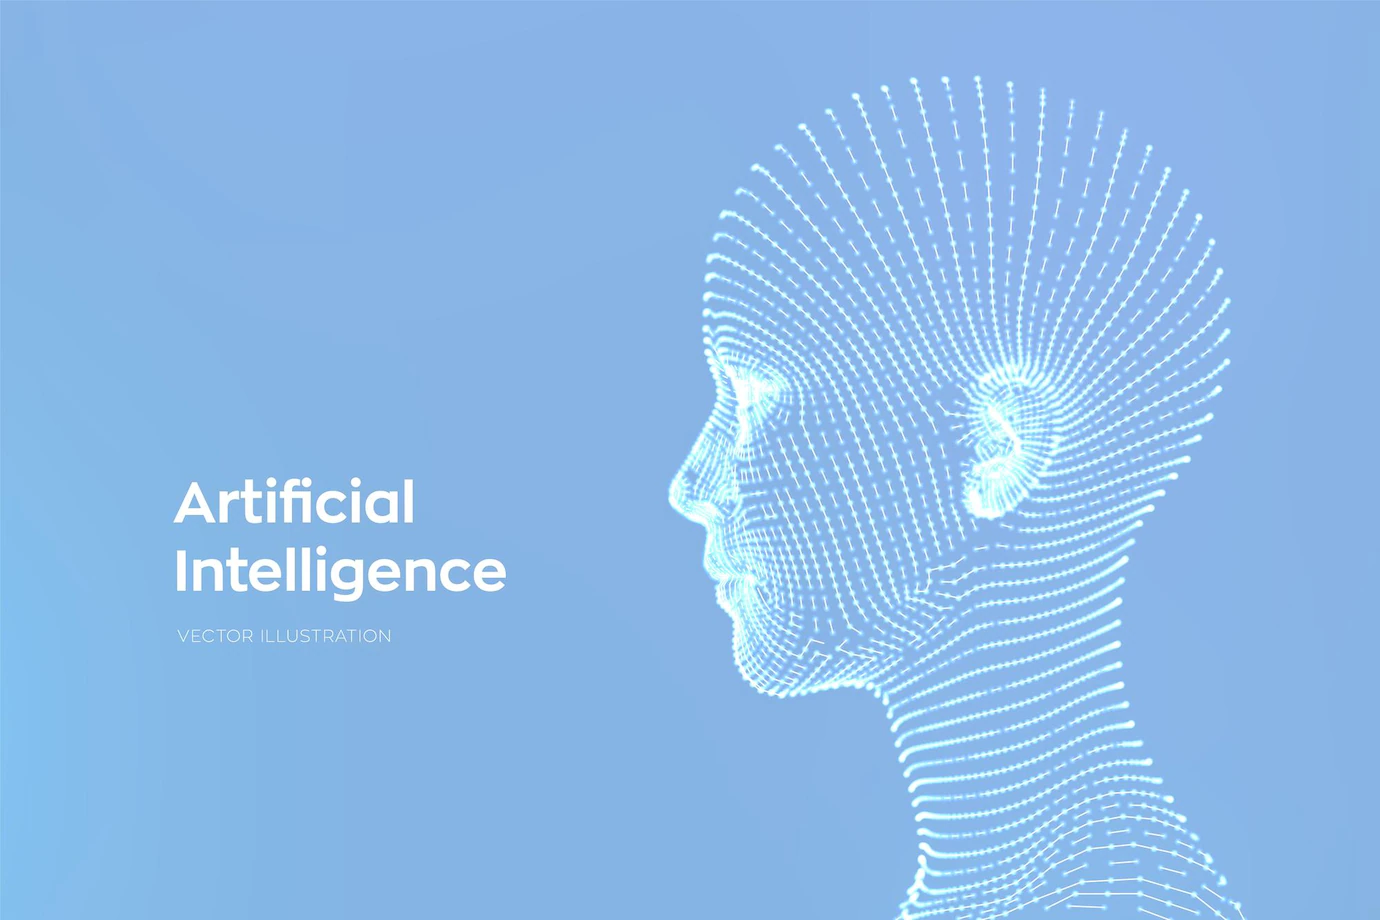 Ai Artificial Intelligence Concept Ai Digital Brain Abstract Digital Human Face Human Head Robot Digital Computer Interpretation Robotics Concept Wireframe Head Concept Vector Illustration 597744 34